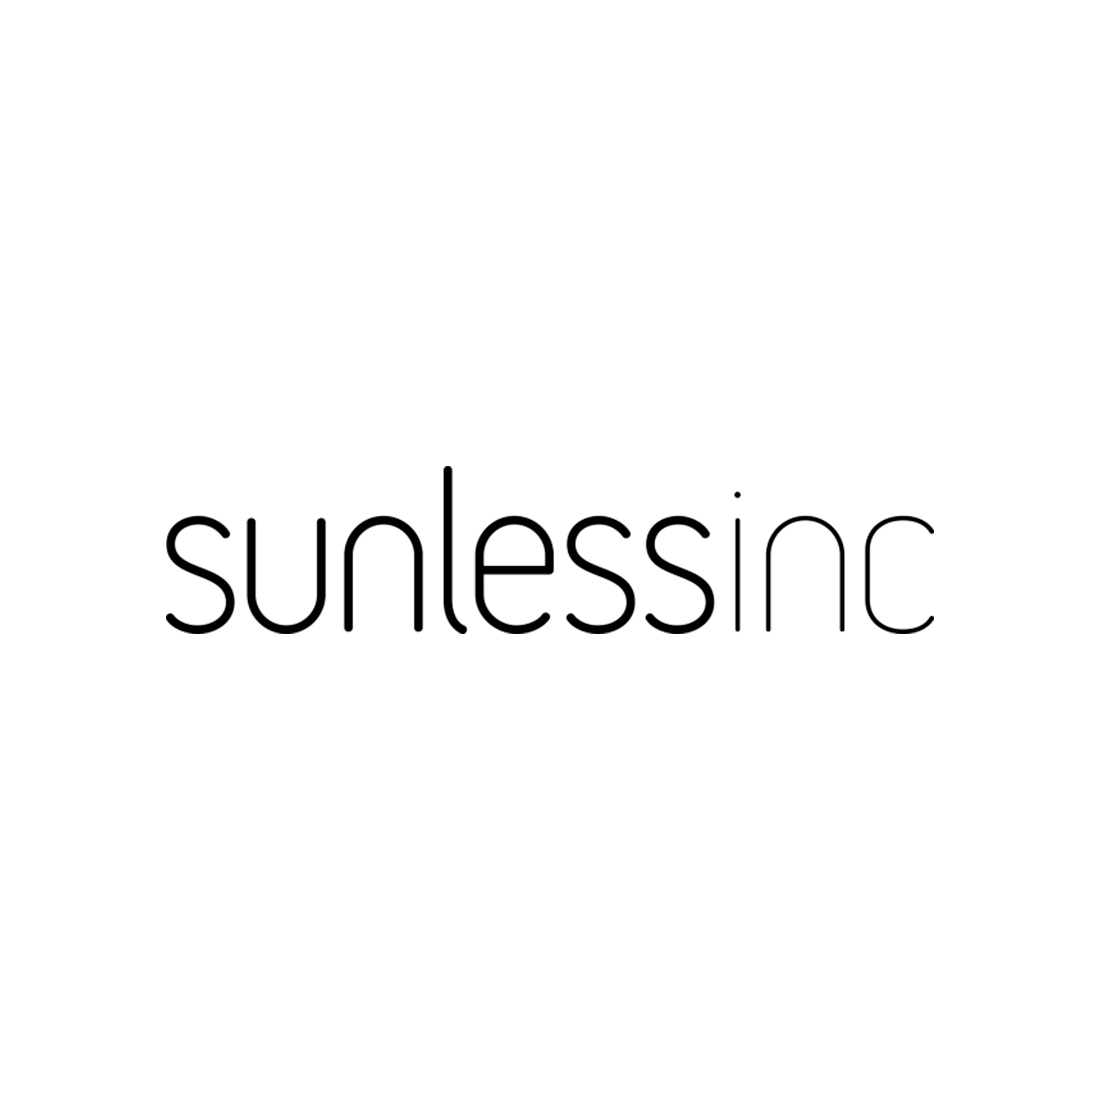 Sunless Inc.